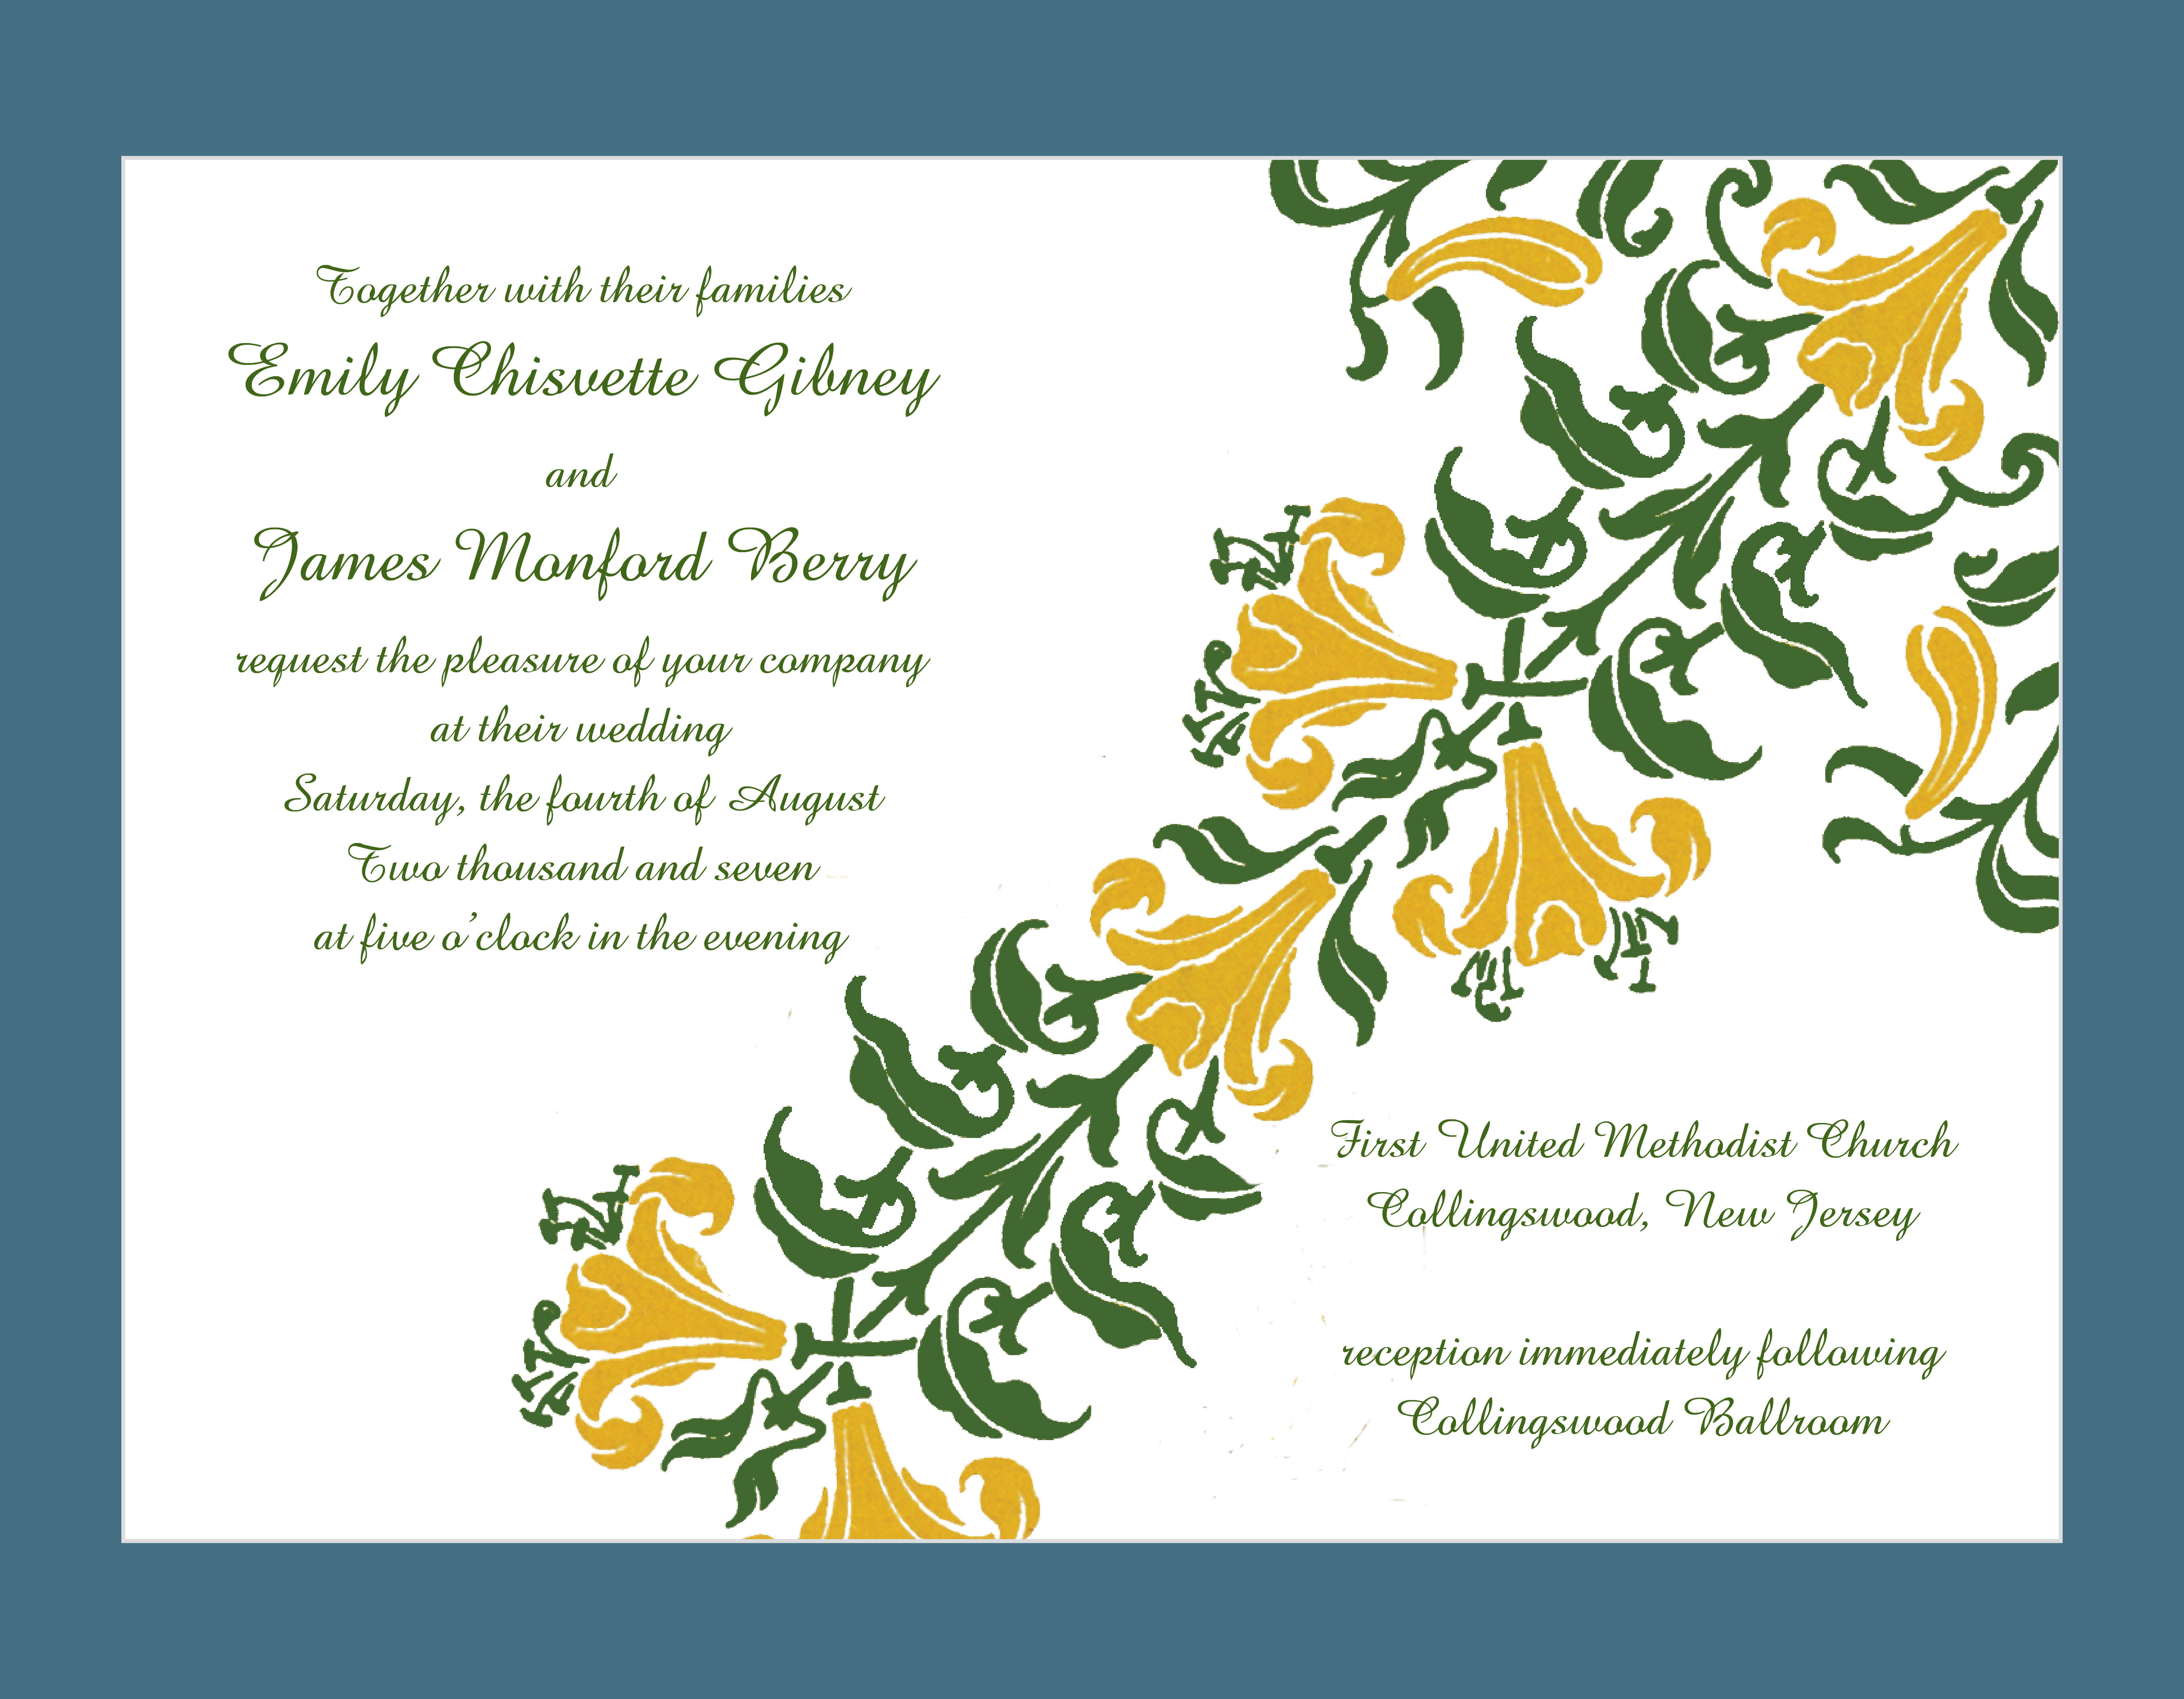 AGW Graphic Design - Berry Wedding Invitation